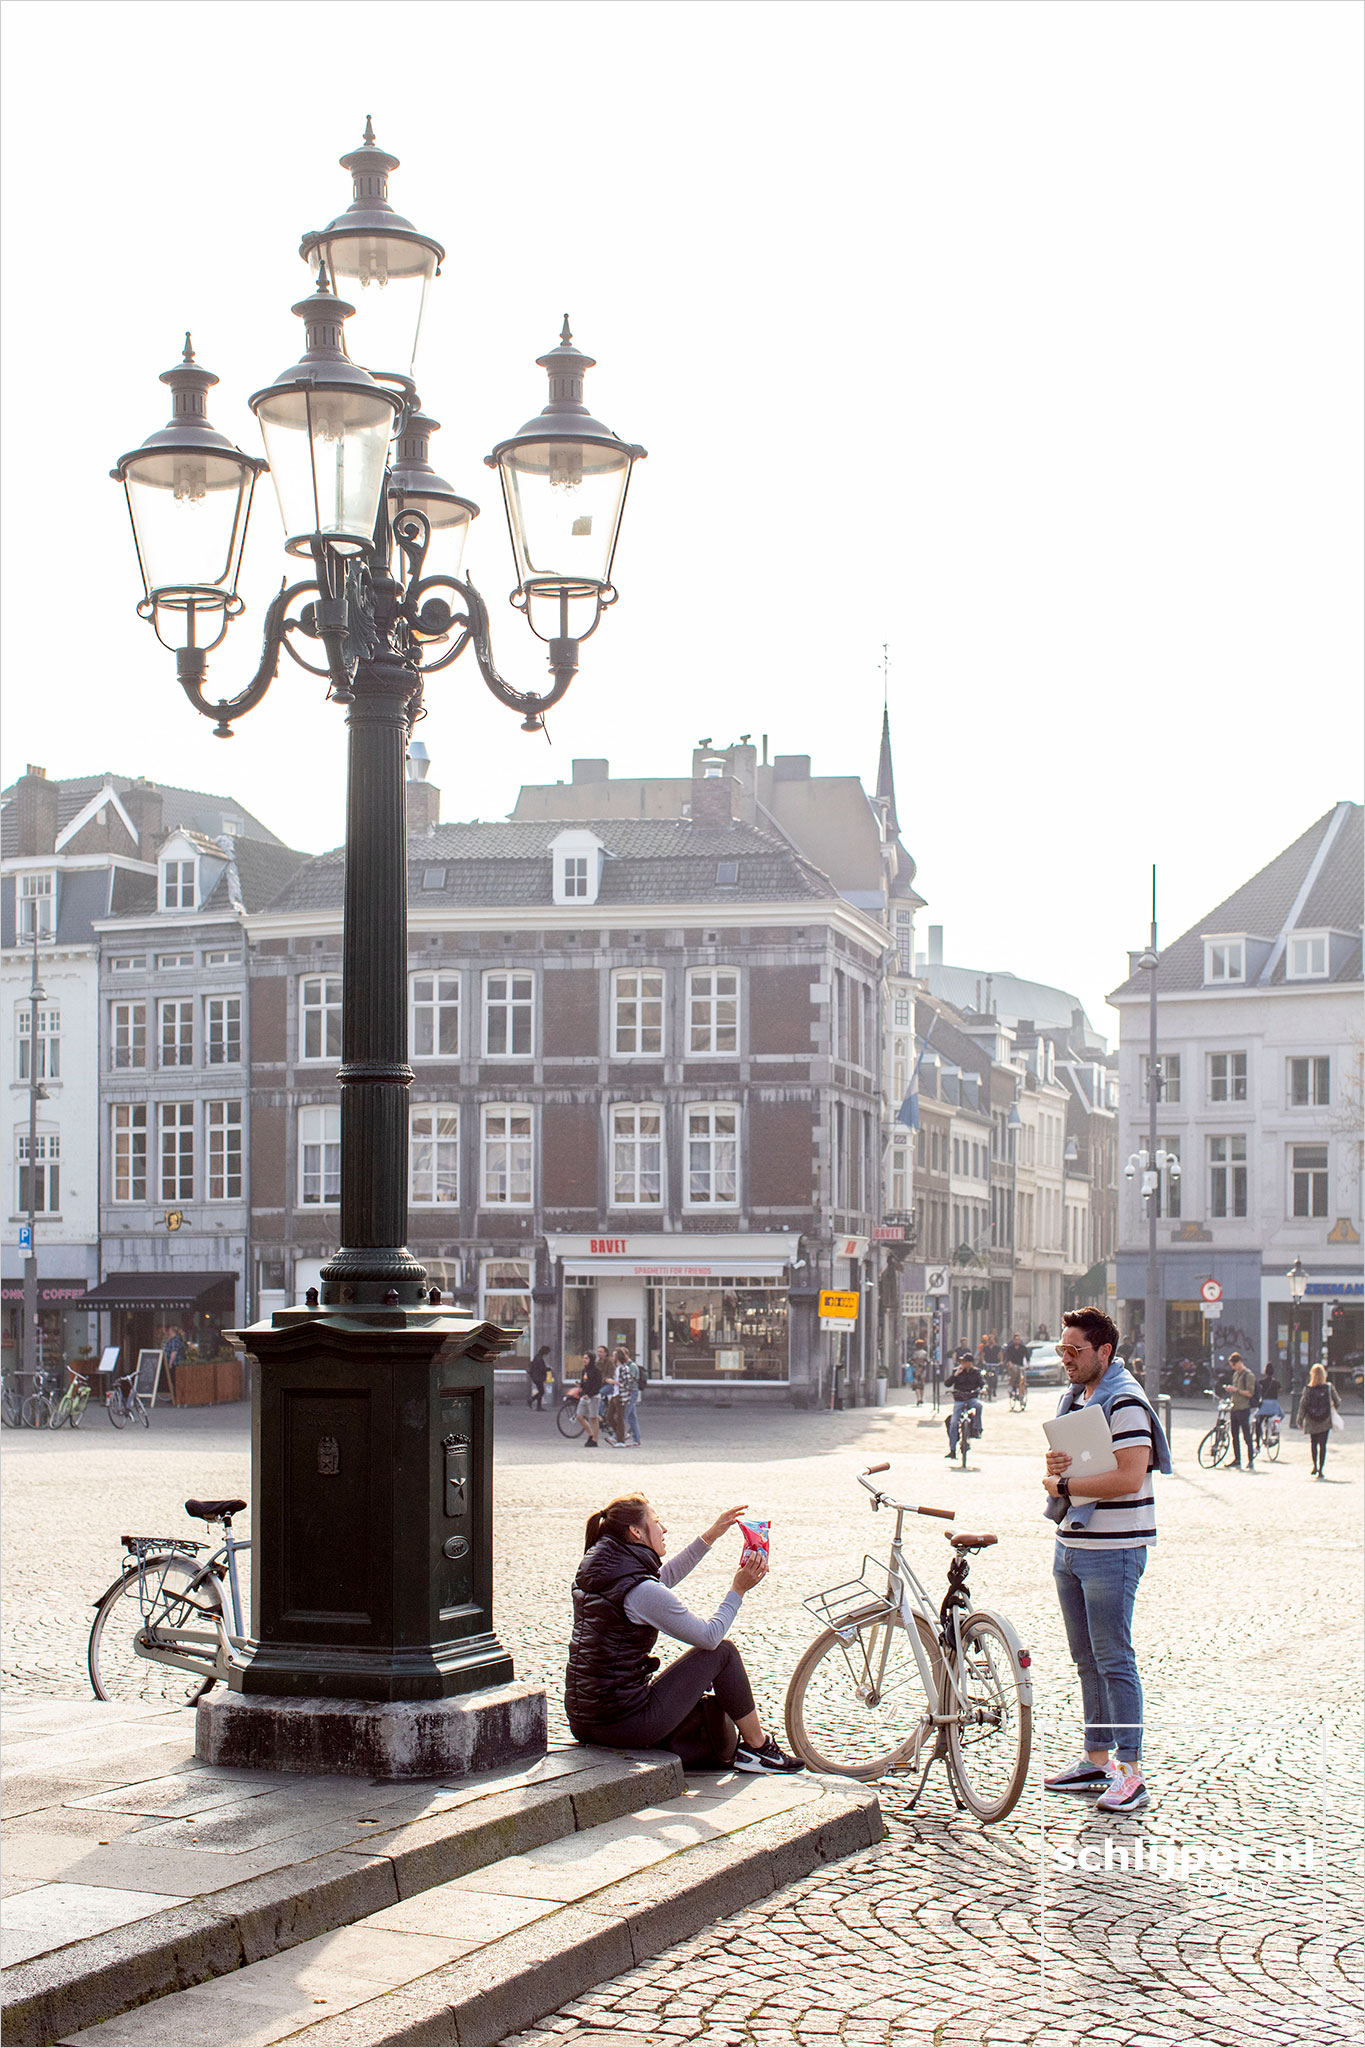 The Netherlands, Maastricht, 1 april 2021